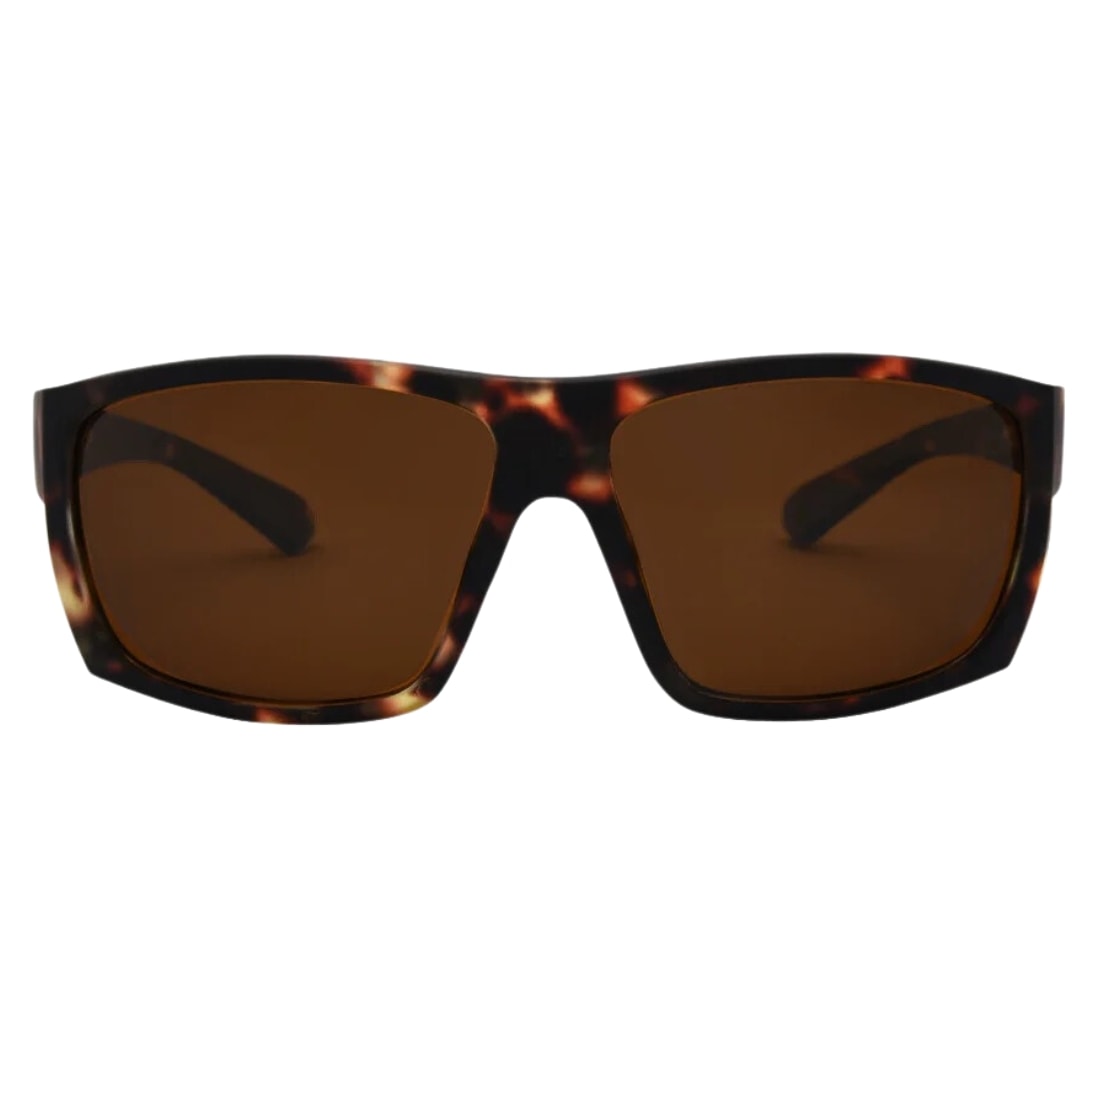 I-Sea Shipwrecks Polarised Sunglasses - Tort/Brown Polarized - Square/Rectangular Sunglasses by I-Sea